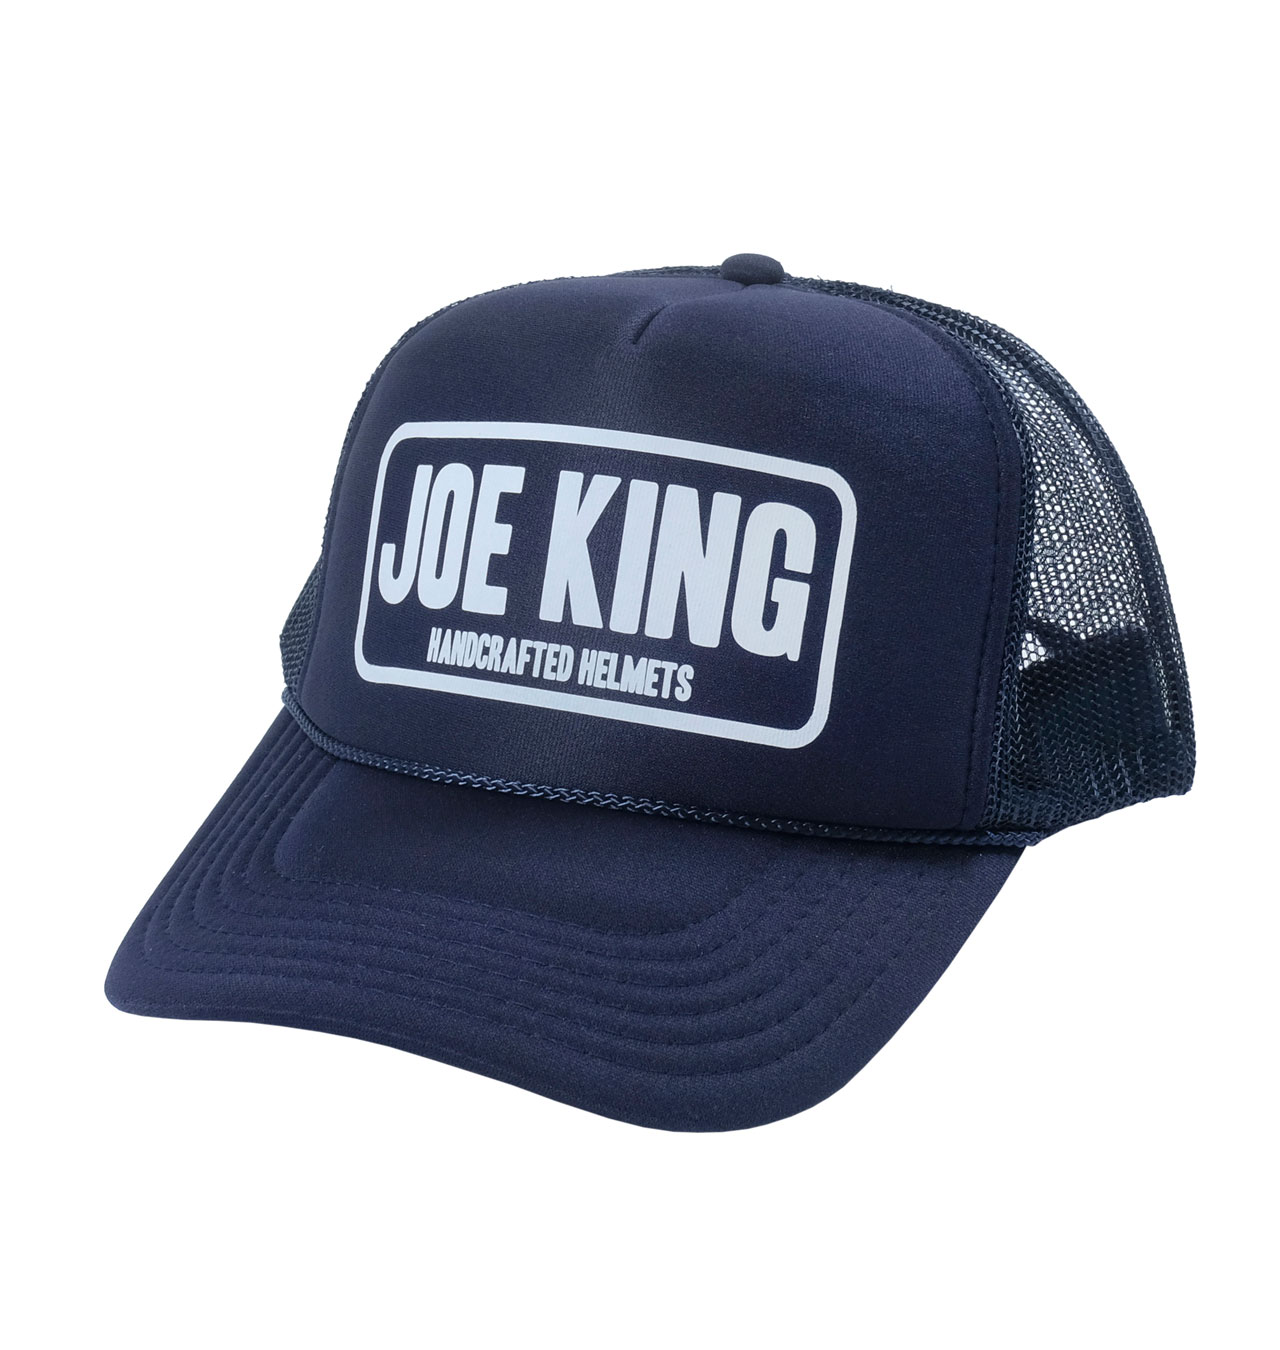 Joe-King---JK-Handcrafted-Helmets-Cap---Navy